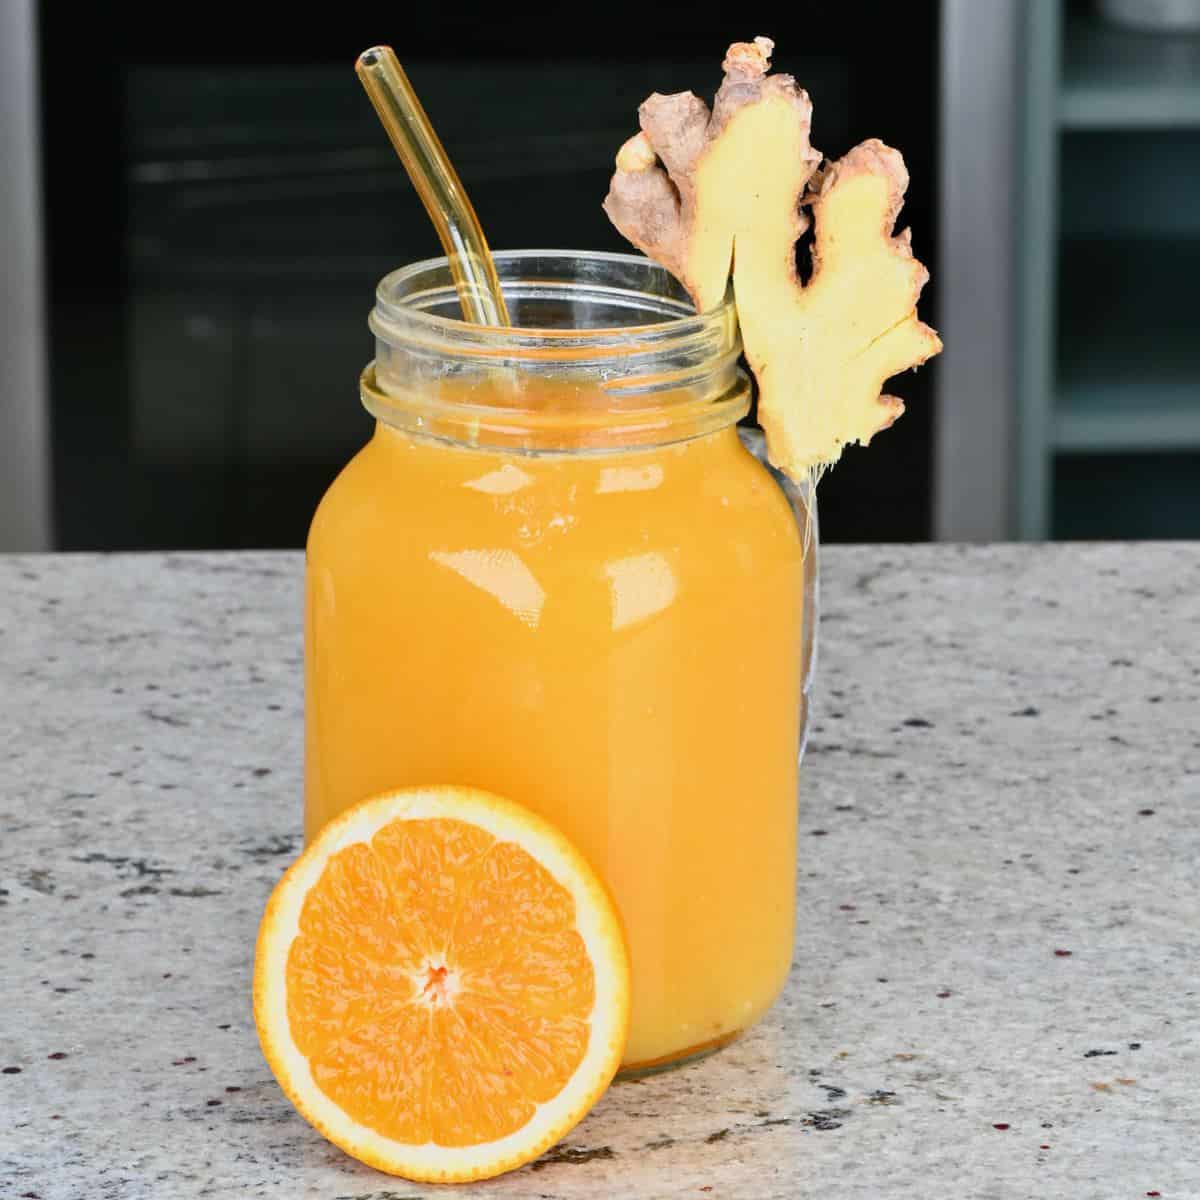 https://www.alphafoodie.com/wp-content/uploads/2020/11/Orange-Ginger-Juice-1-of-1.jpeg